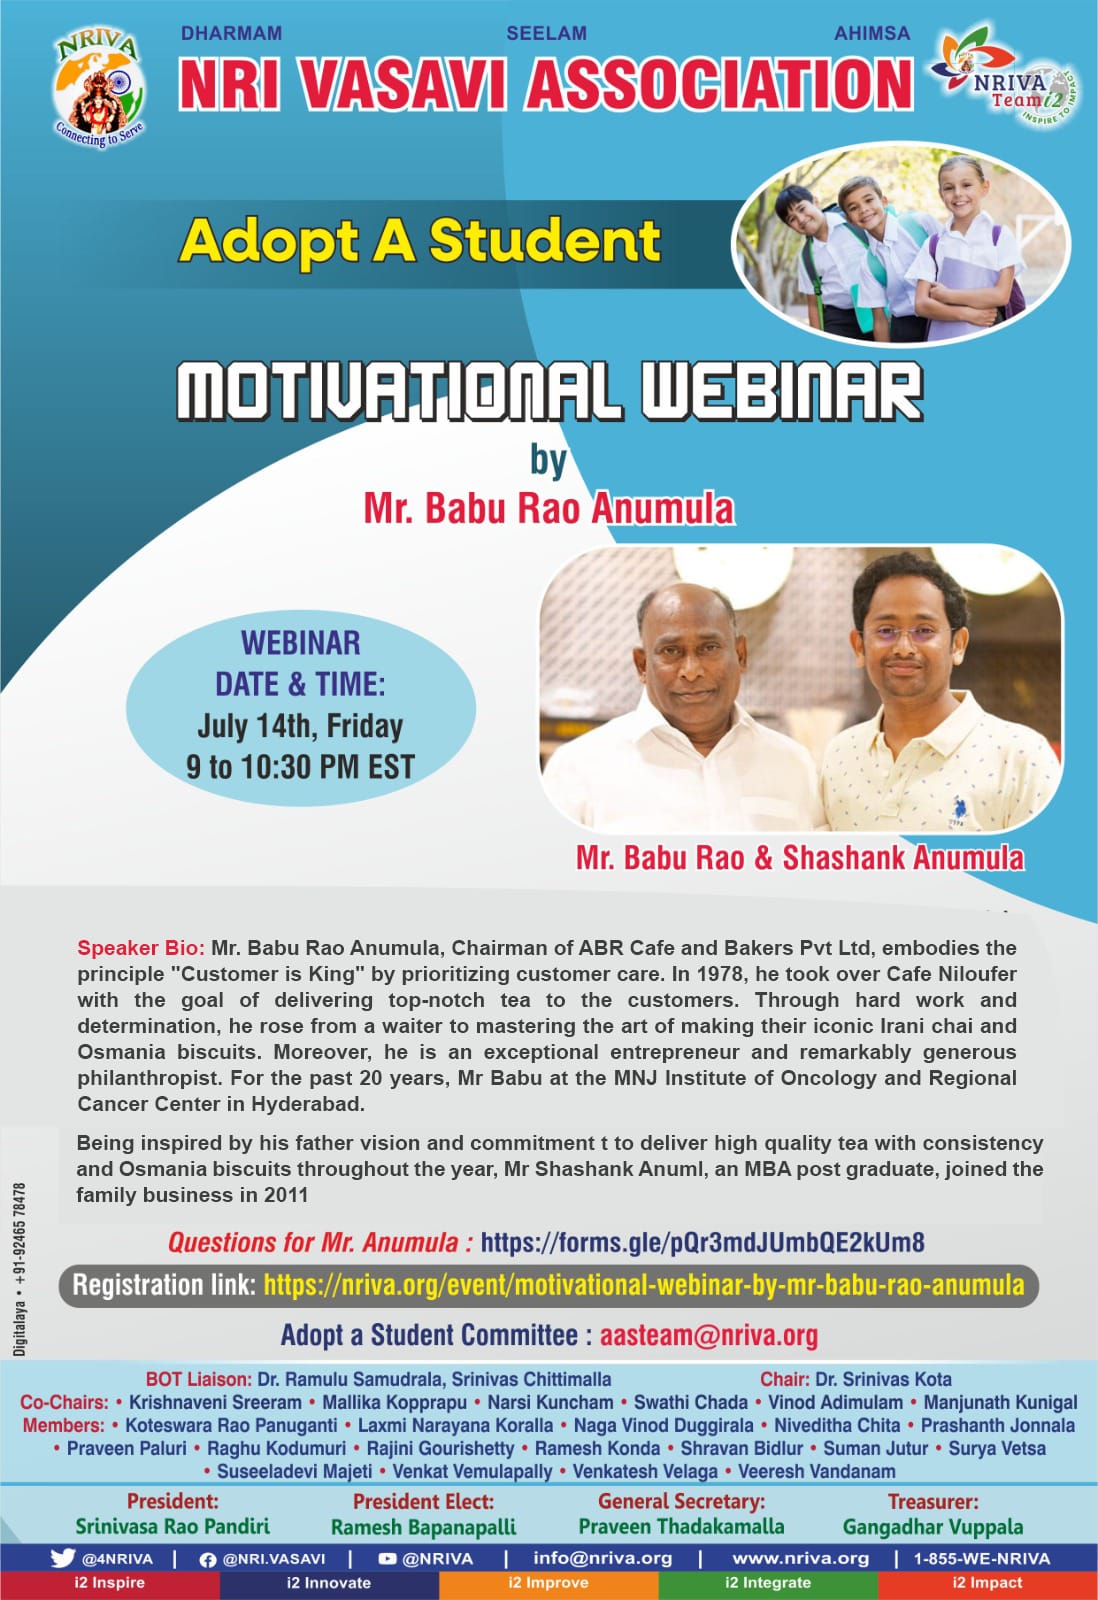 Motivational Webinar by Mr. Babu Rao Anumula